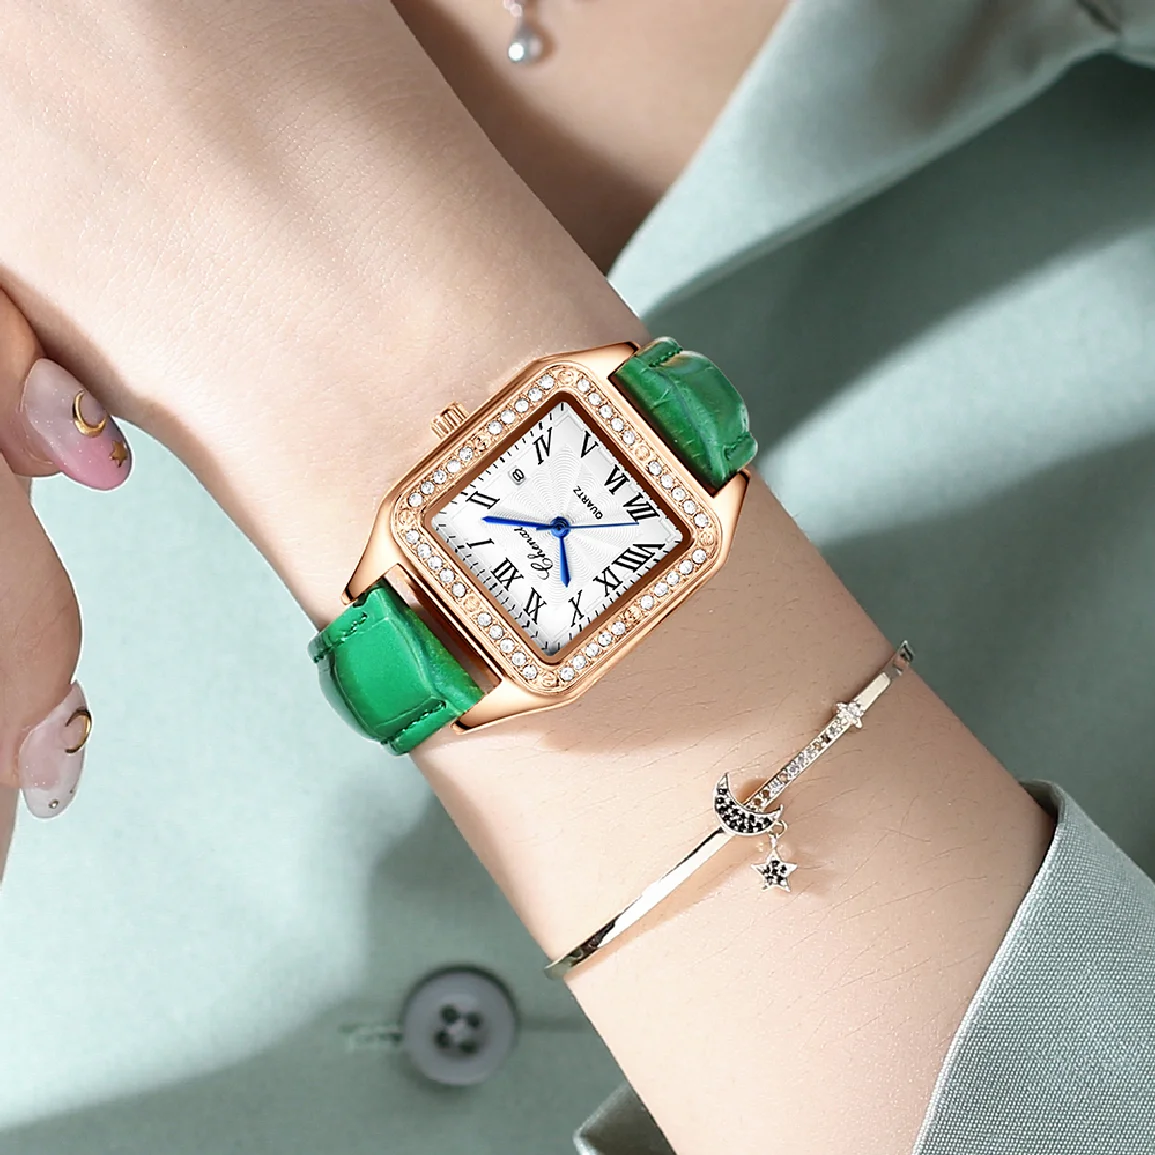 CHENXI Watch Women Top Luxury Brand Business Quartz Watch Ladies Leather Waterproof Wrist Watch Girl Clock Relogio Feminino enlarge